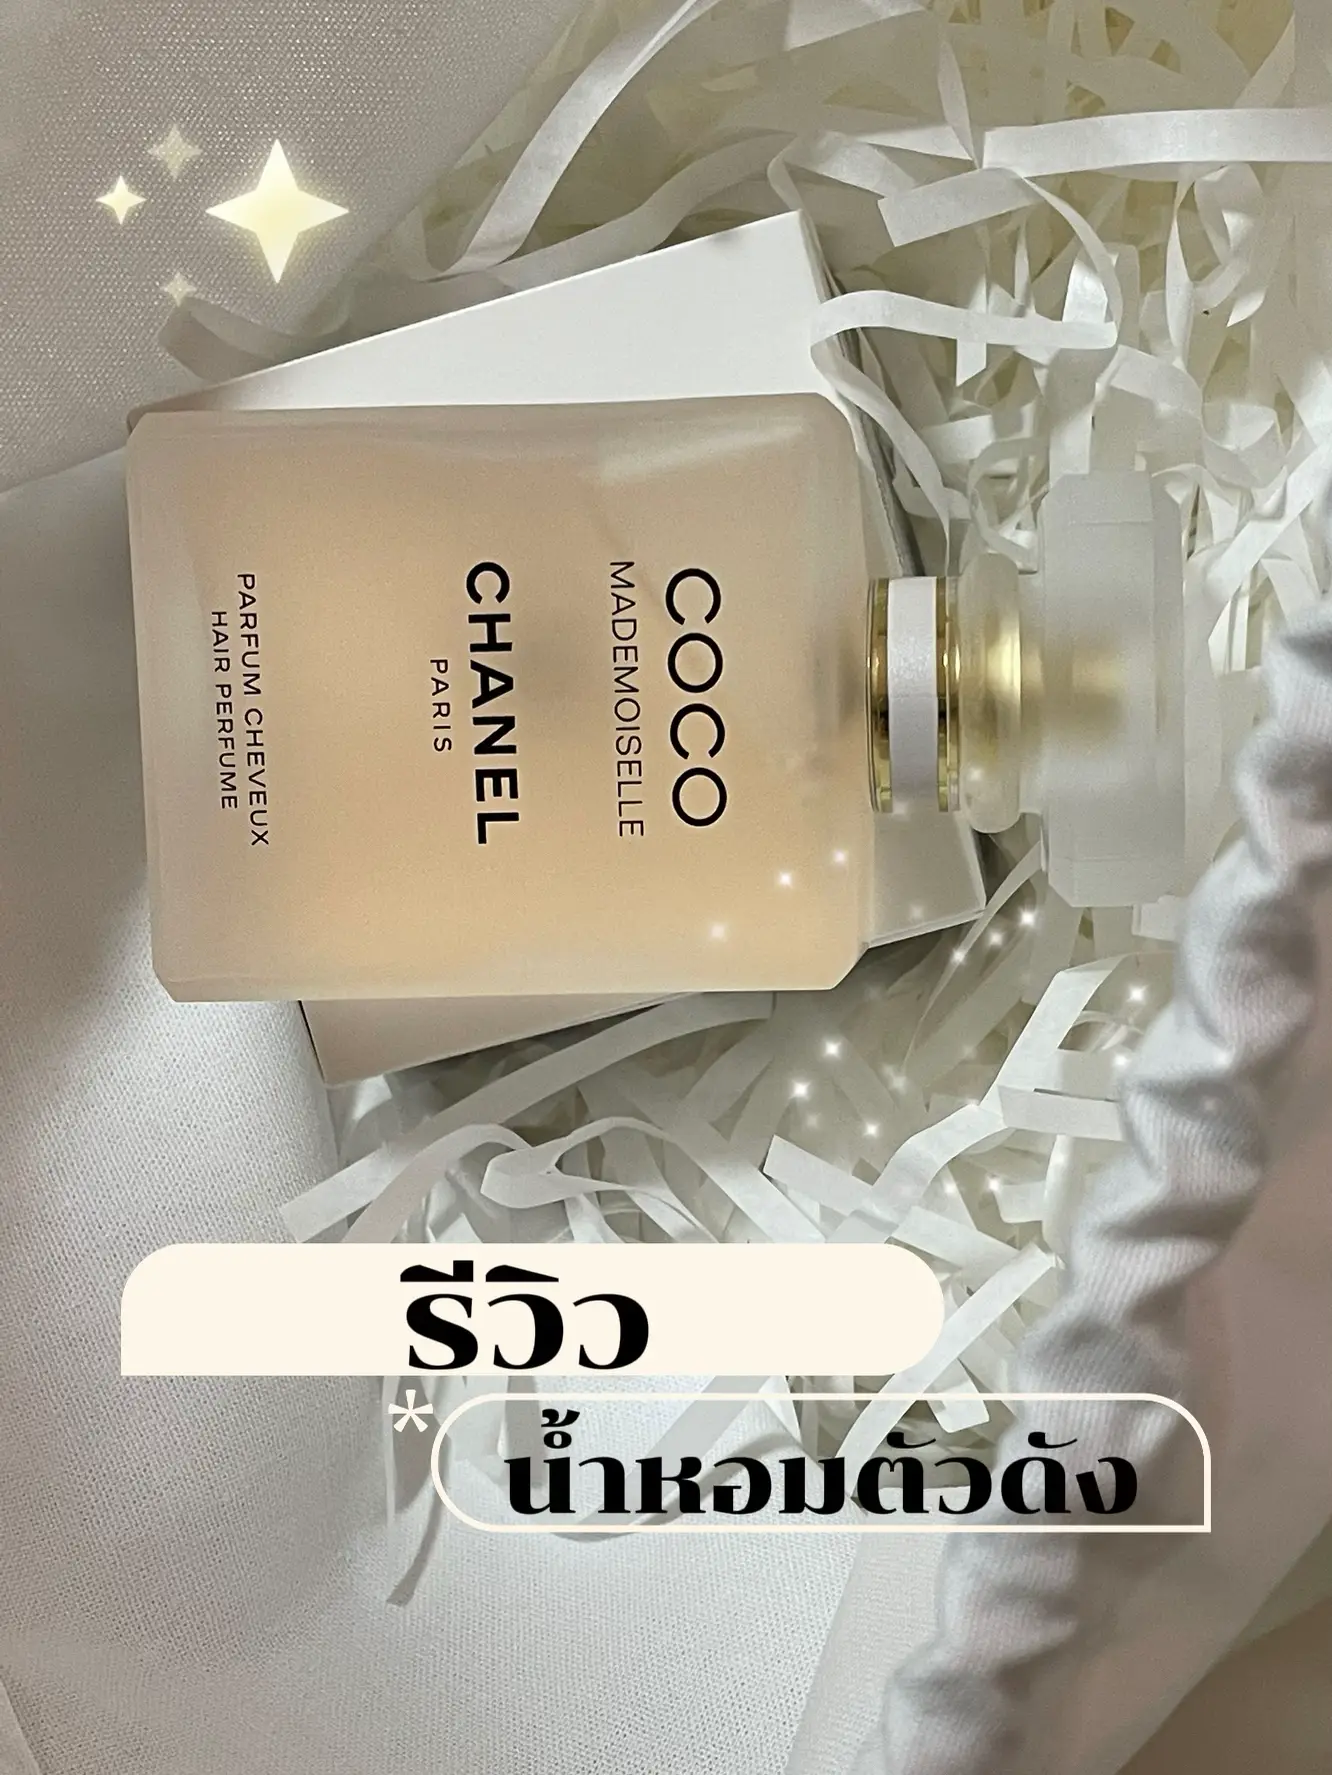 chanel coco mademoiselle hair perfume 35ml